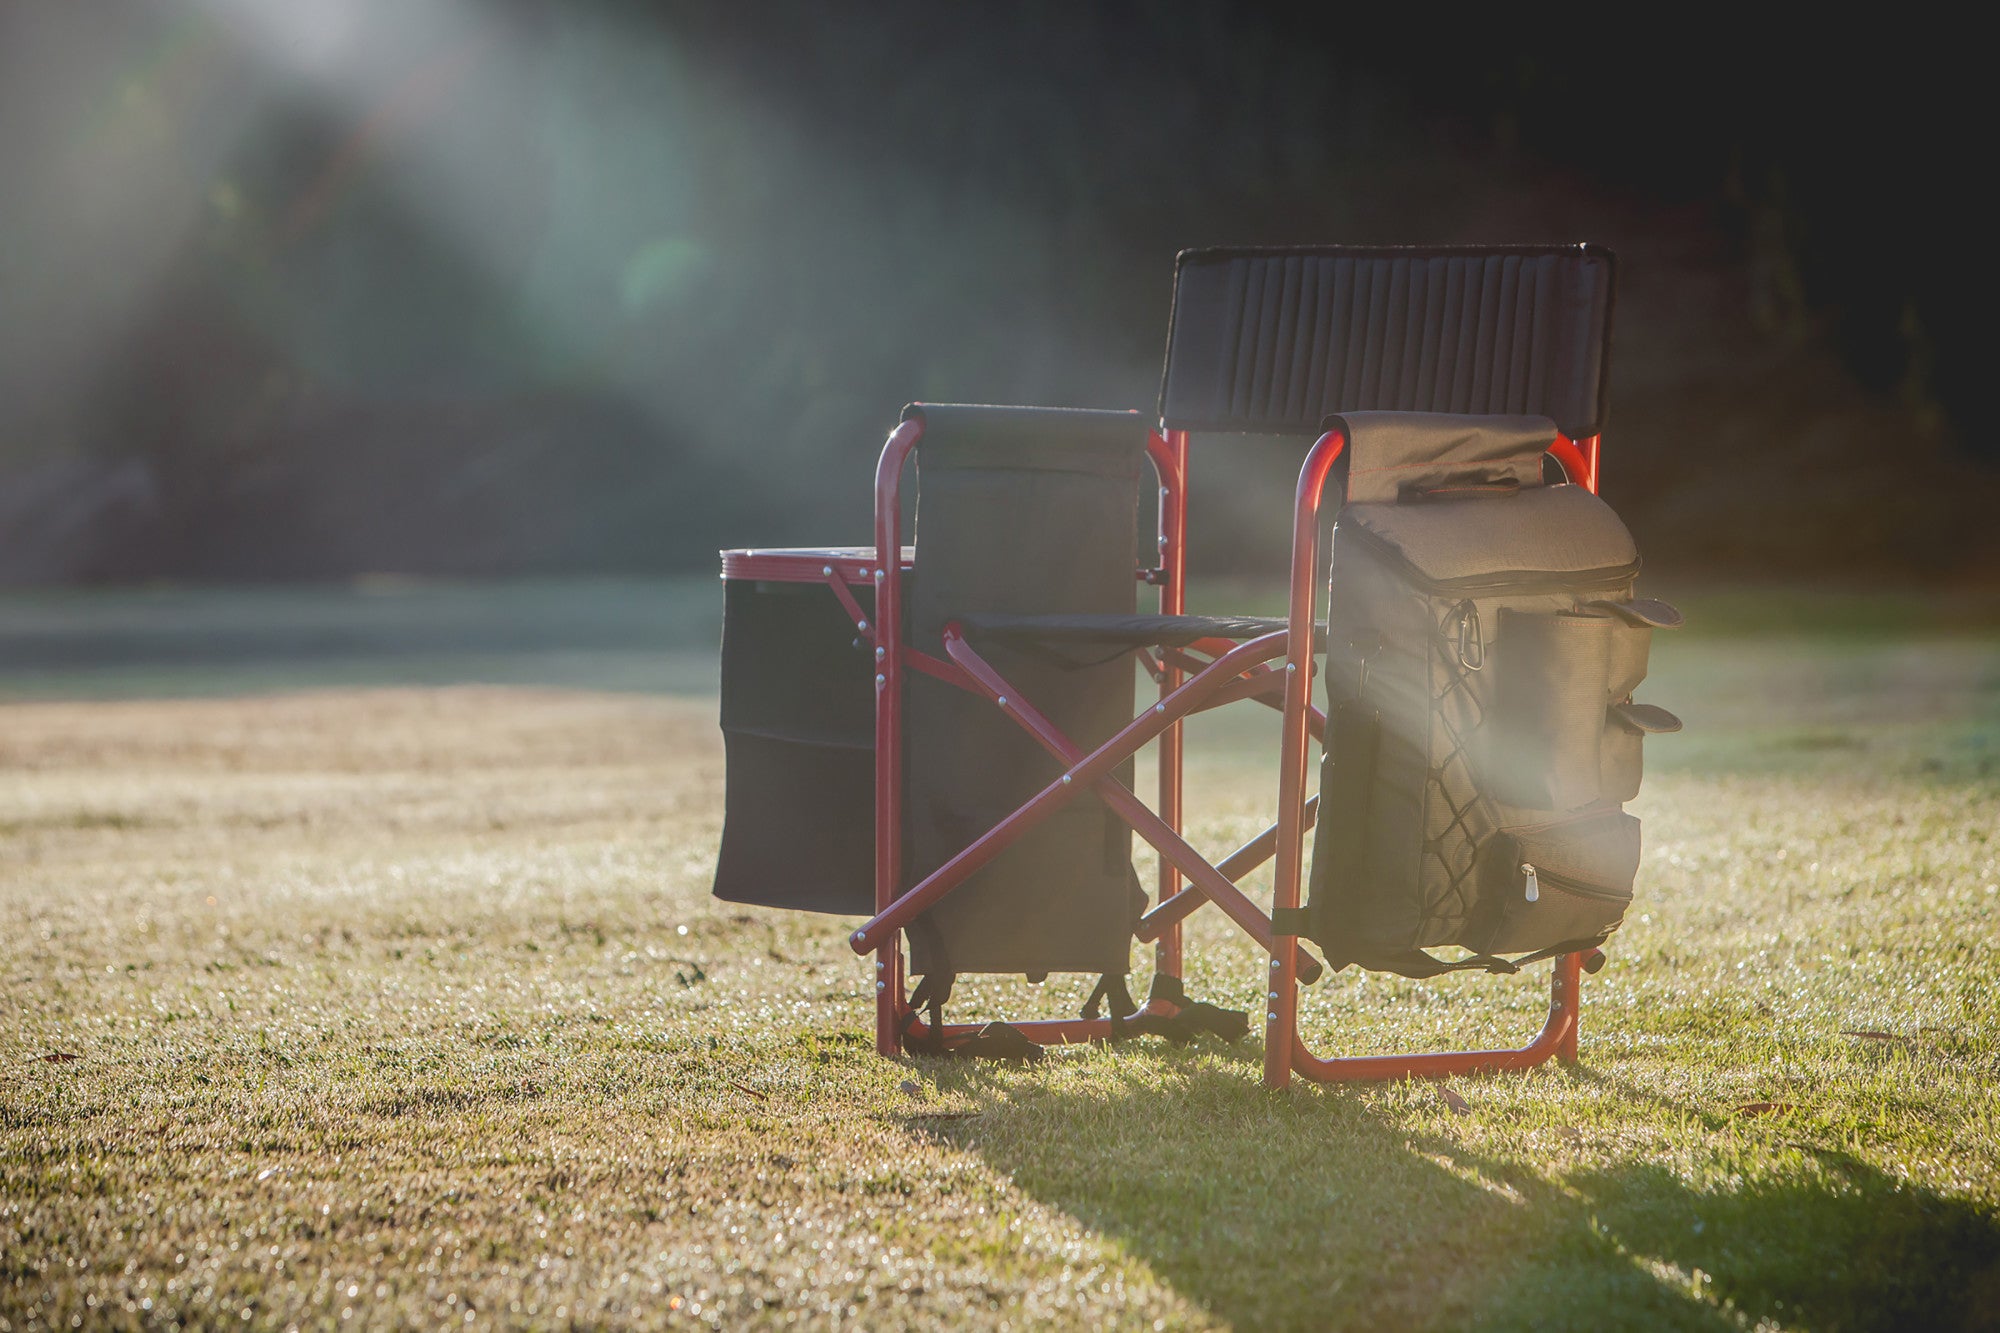 Cincinnati Reds - Fusion Camping Chair